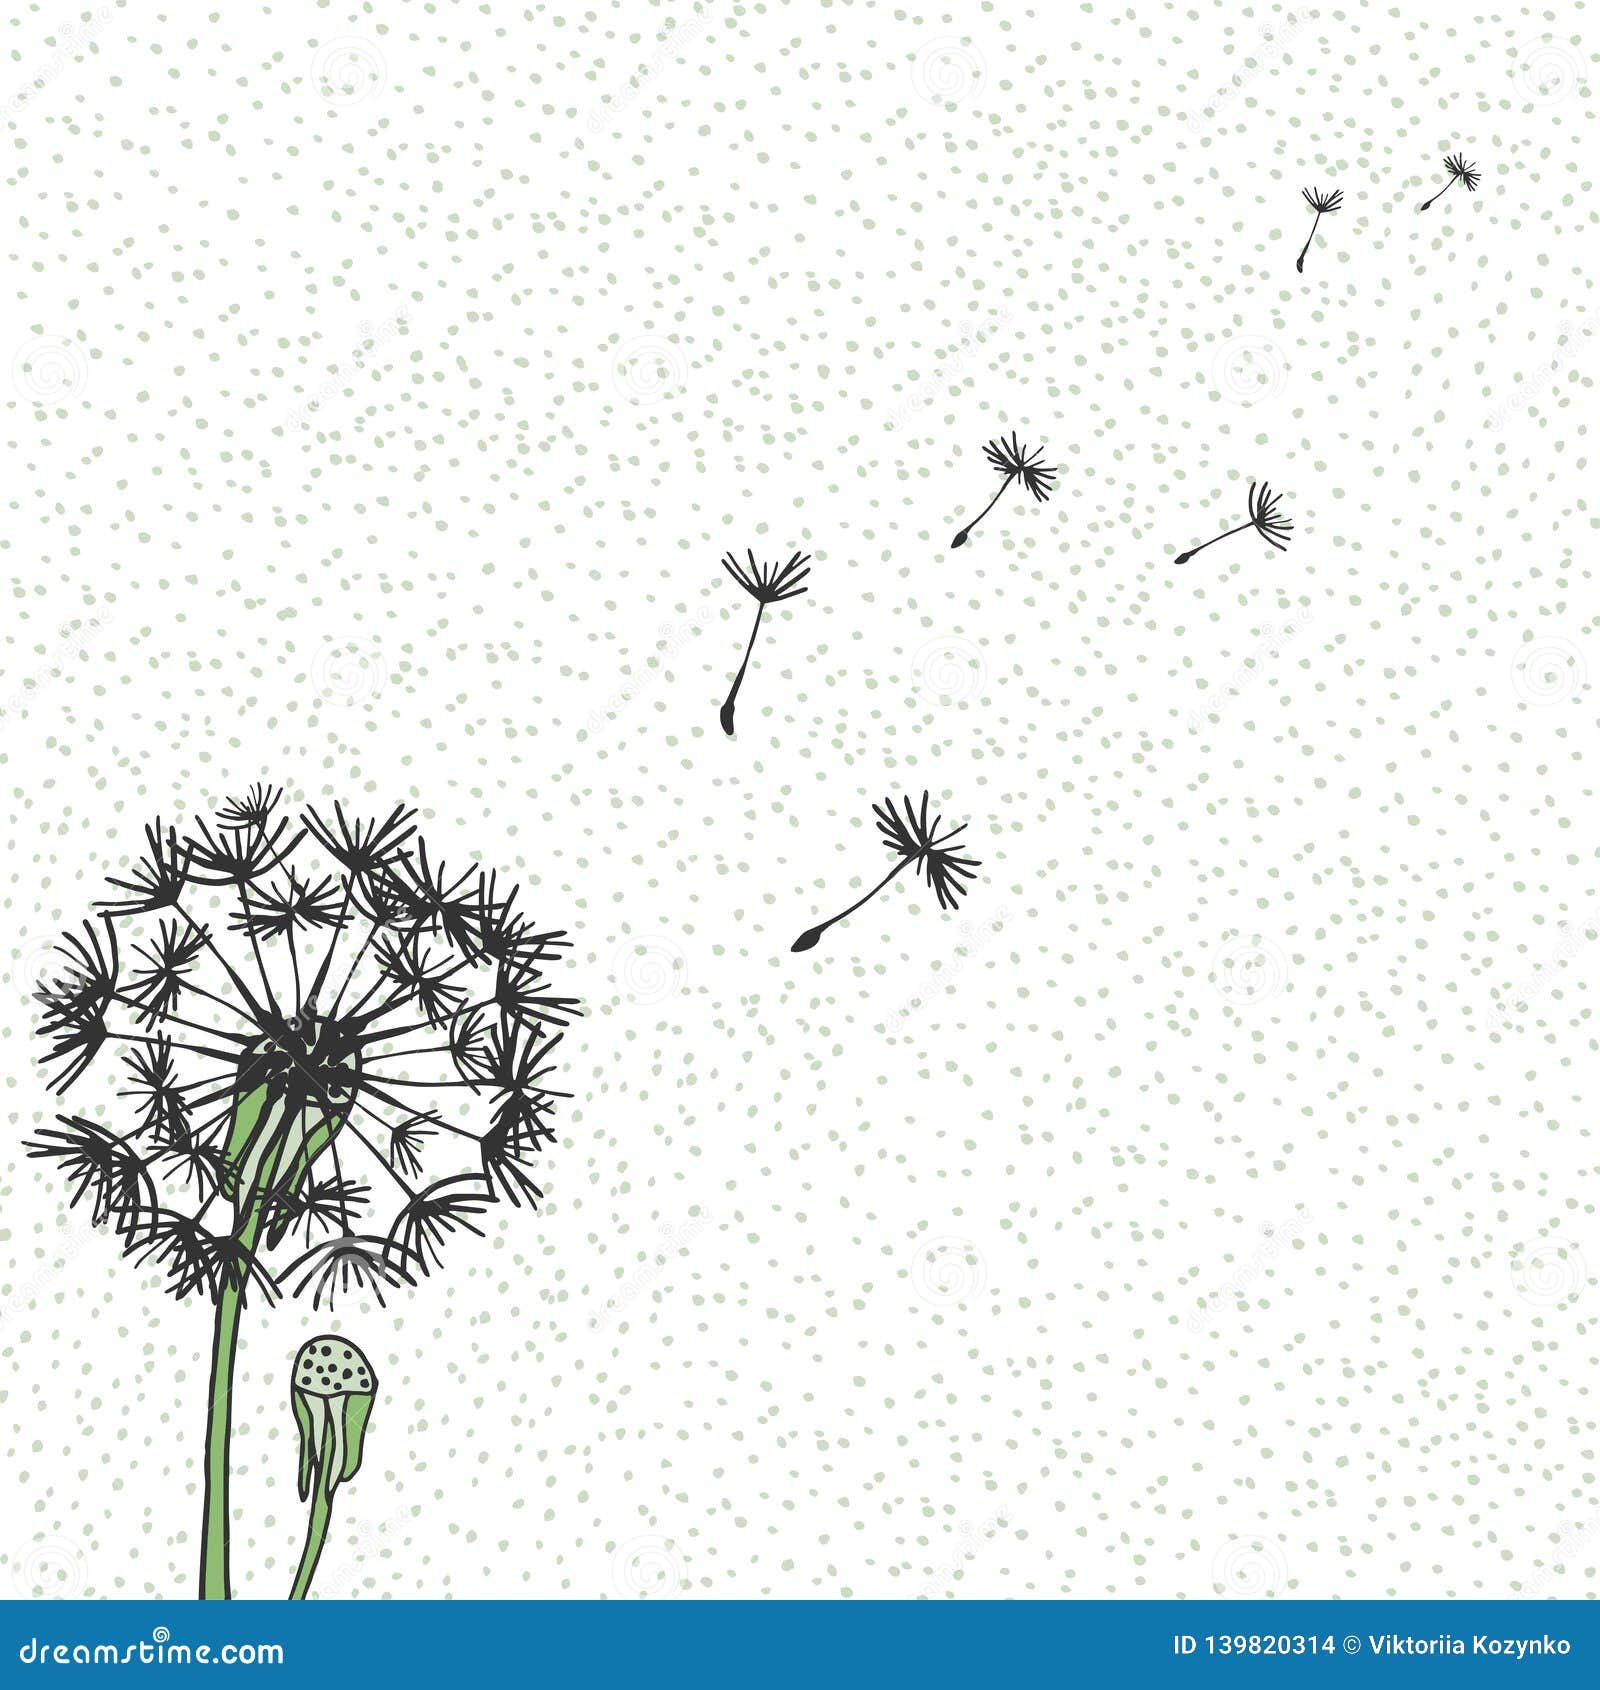  dandelion, hand drawing. flying blow dandelion buds black outdoor decoration on a background speckled